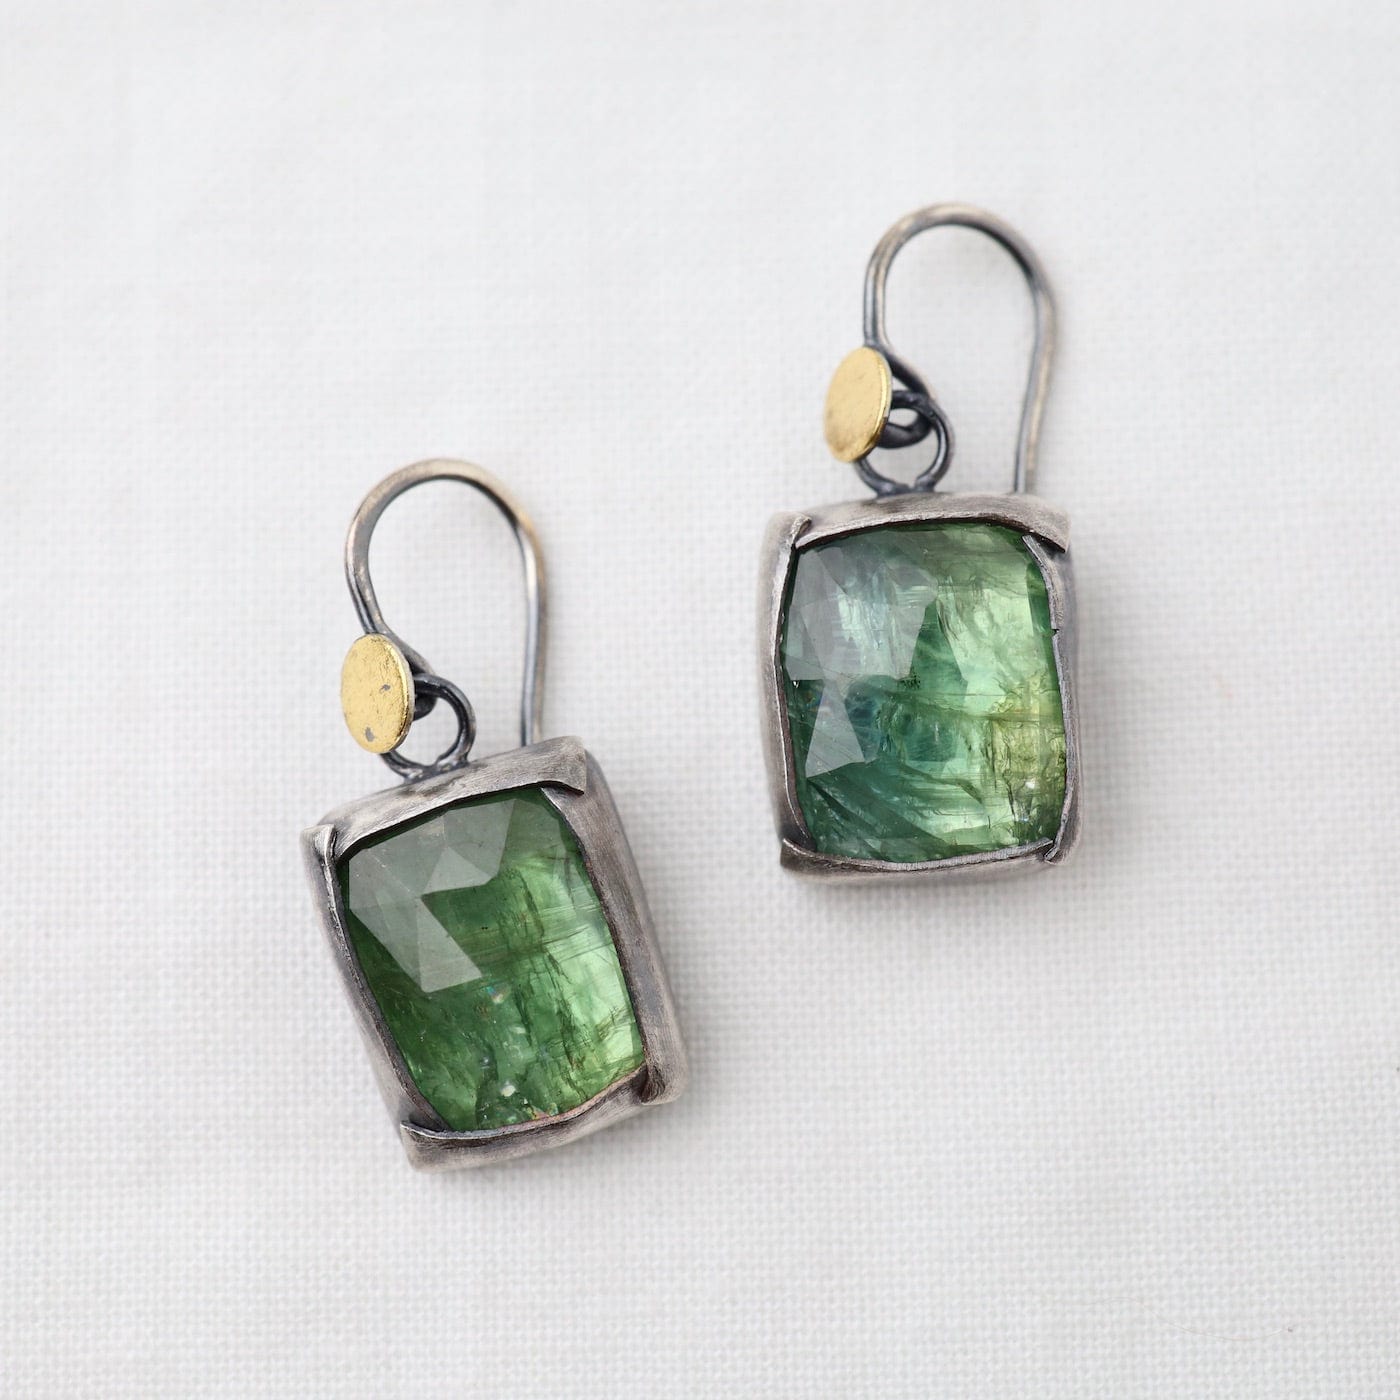 EAR Square Fold Earrings With Green Kyanite